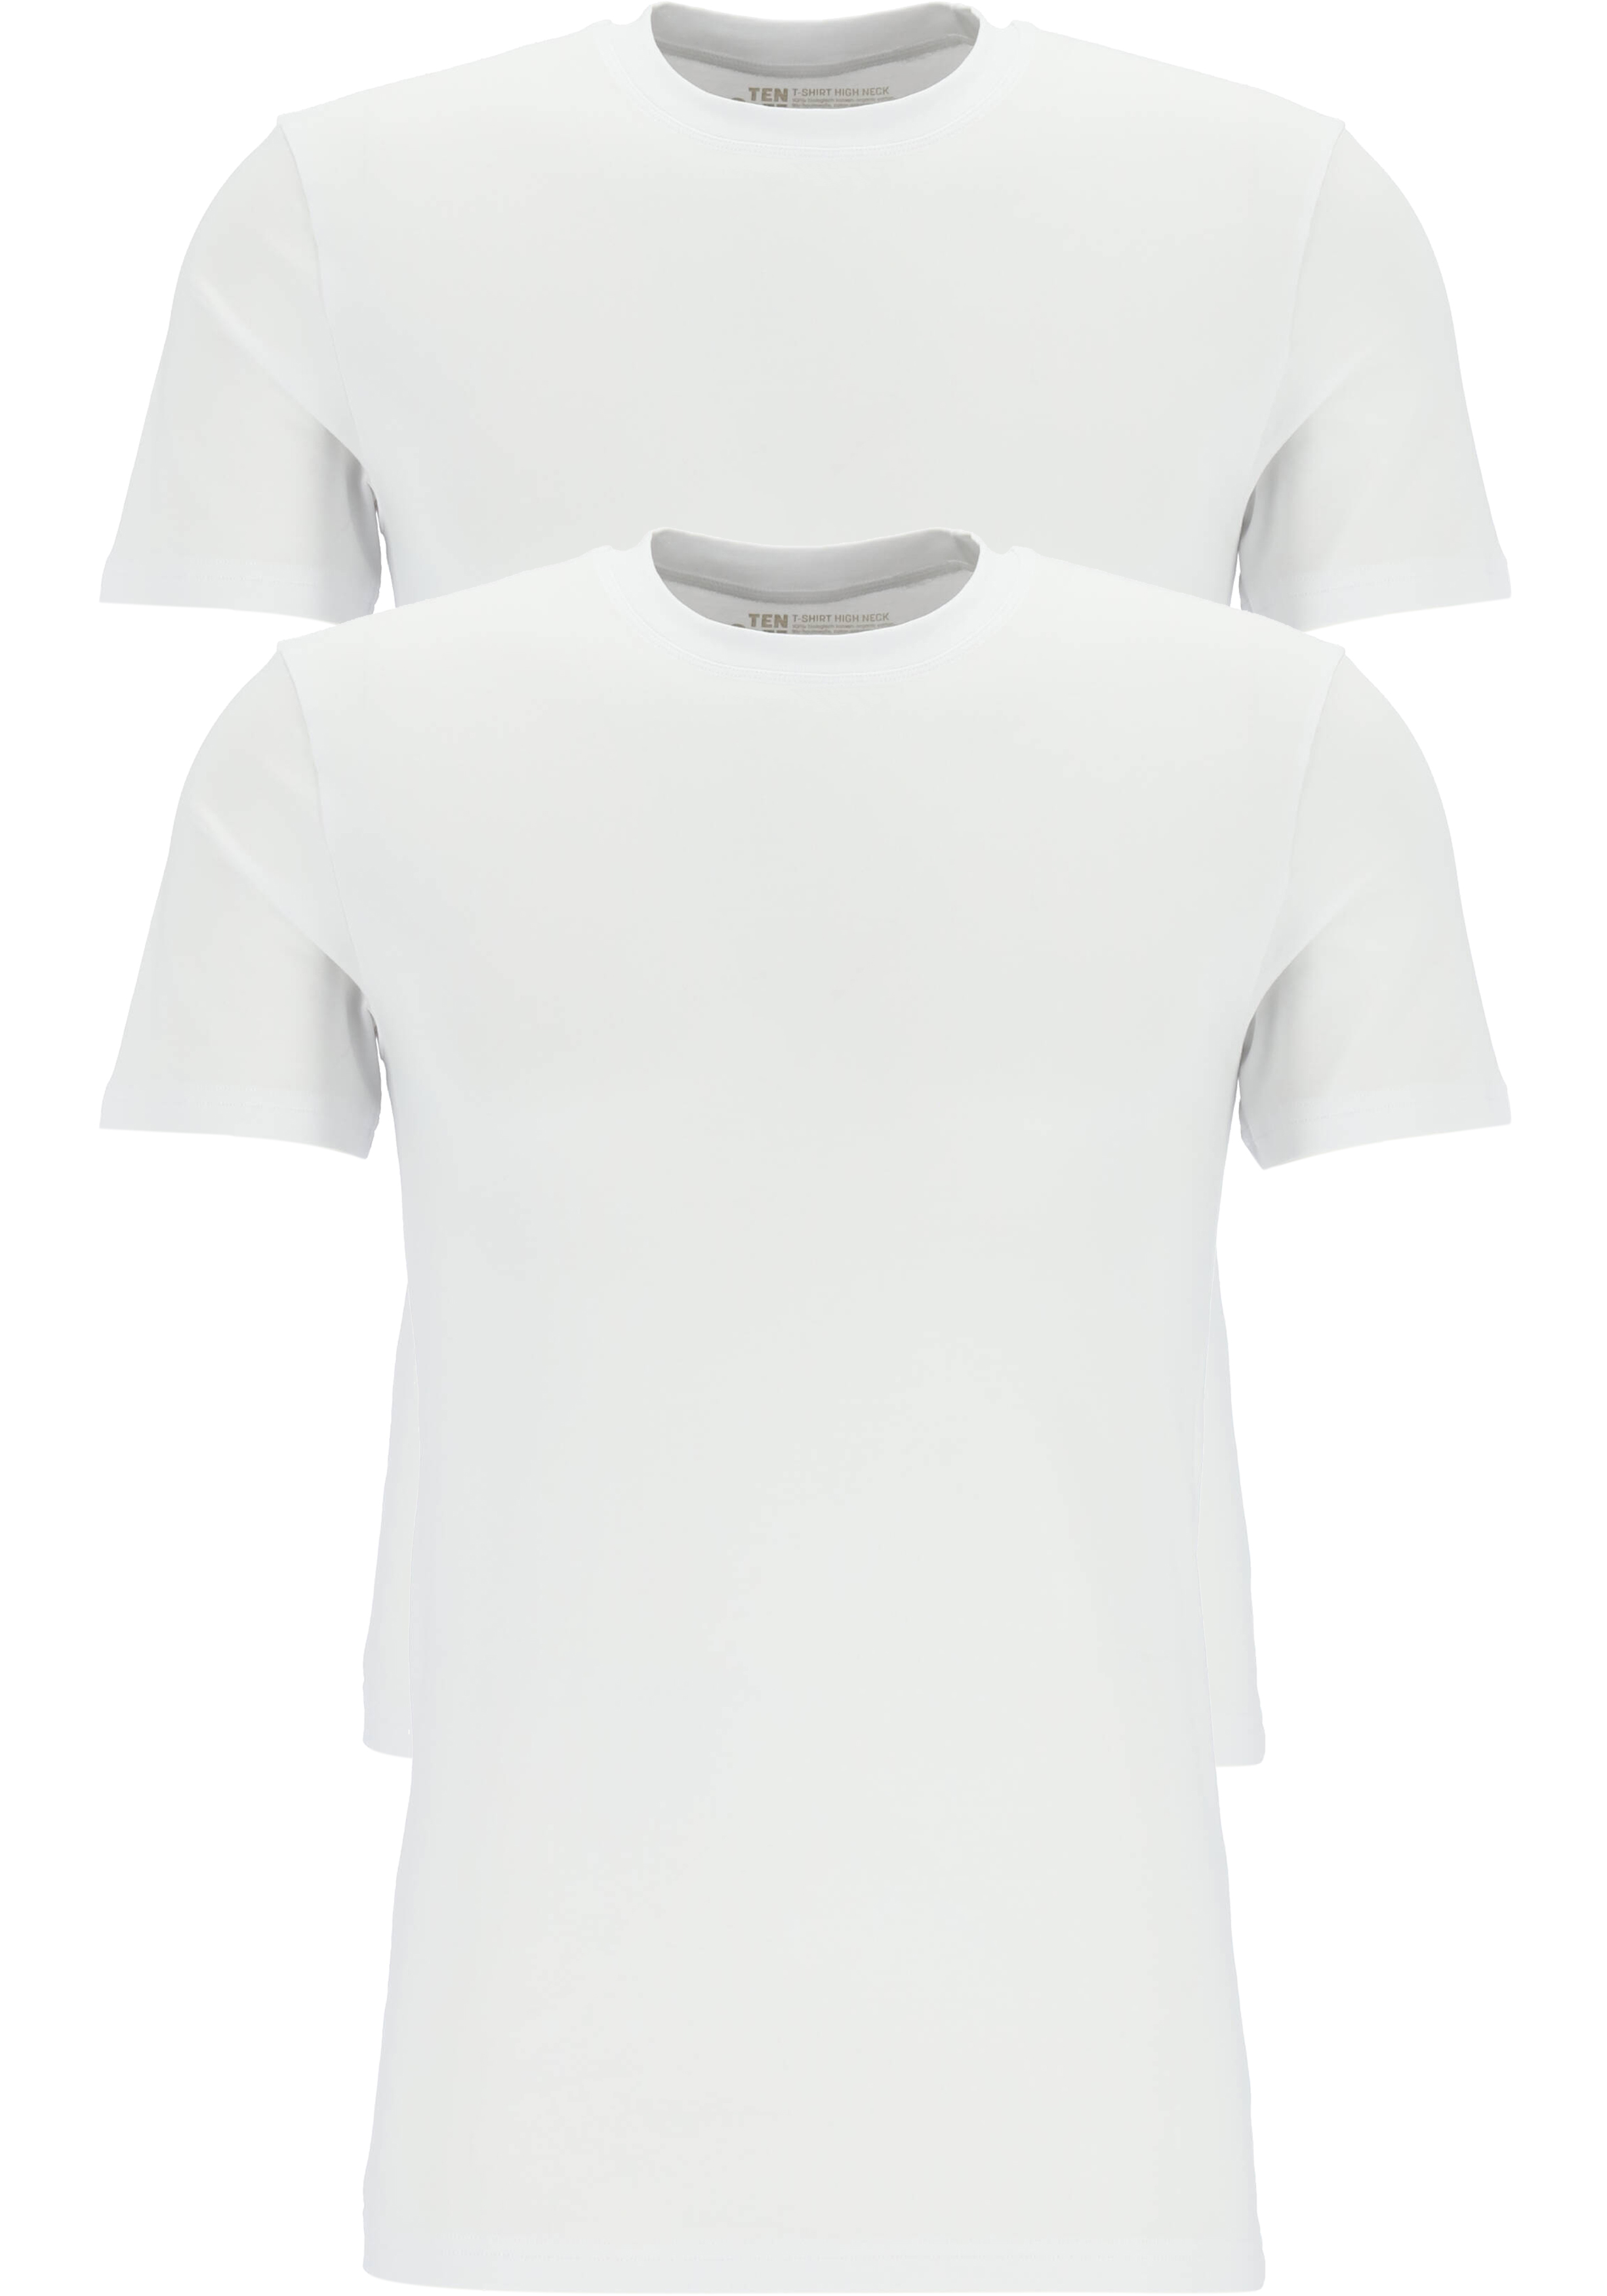 TEN CATE Basics men T-shirt (2-pack), heren T-shirts brede O-hals, wit